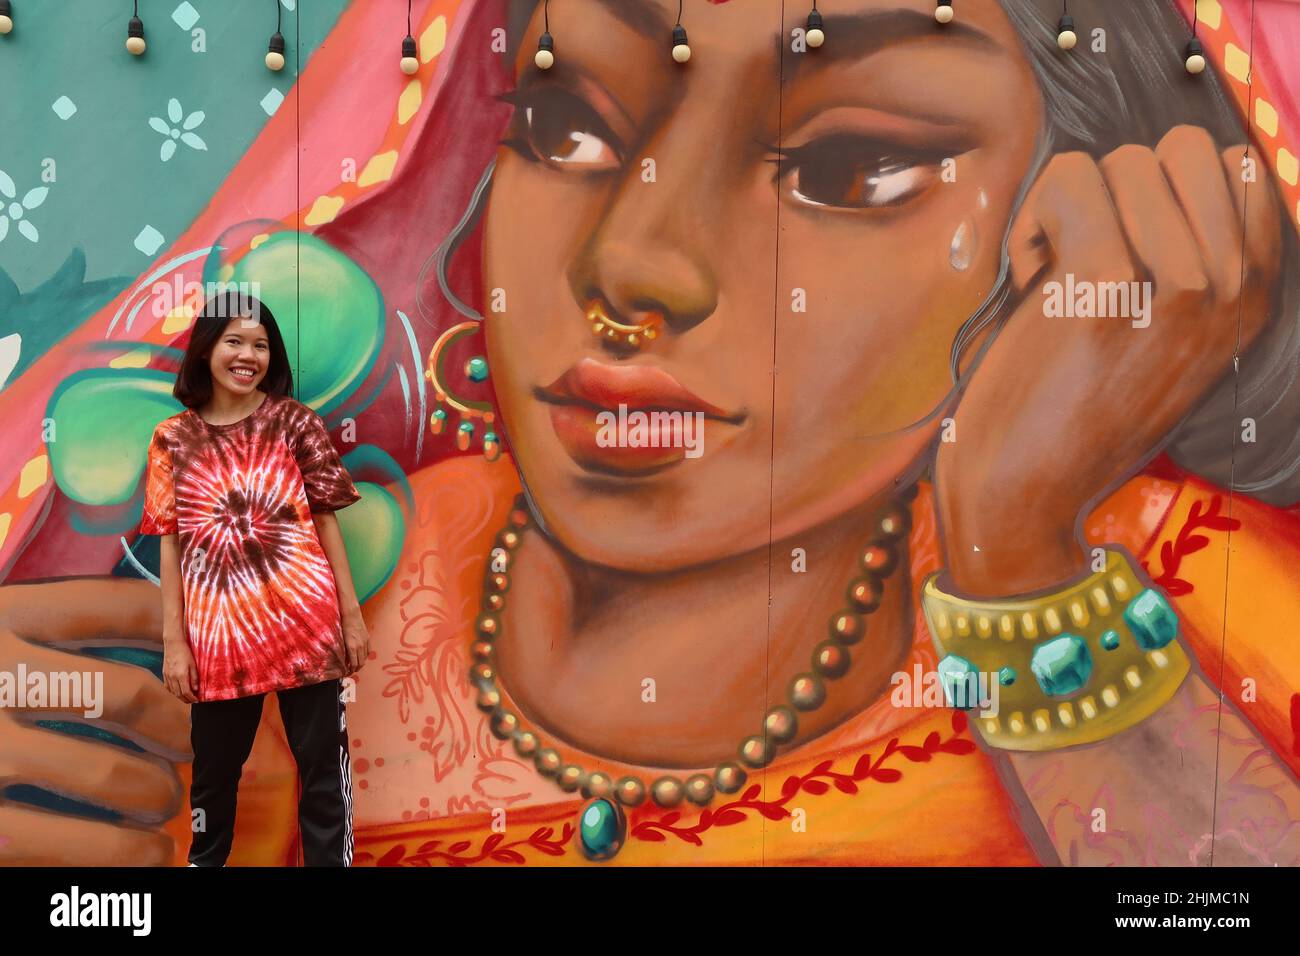 Woman smiling in front of a wall painting of an Indian woman on Ong Ang Walking Street by Klong Ong Ang, Chinatown, Phahurat, Bangkok, Thailand, Stock Photo